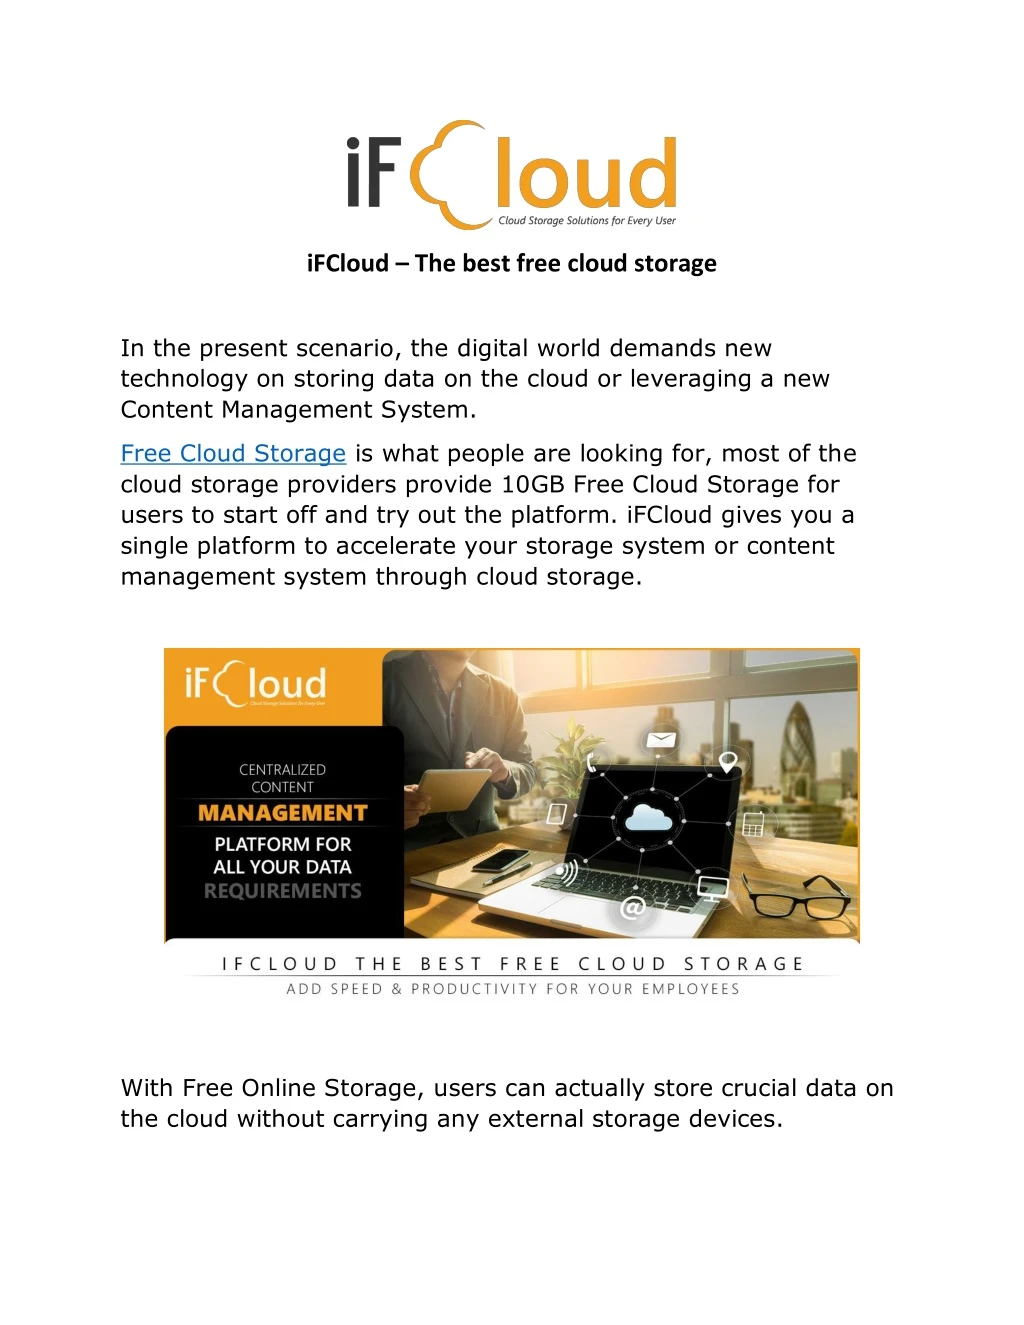 ifcloud the best free cloud storage